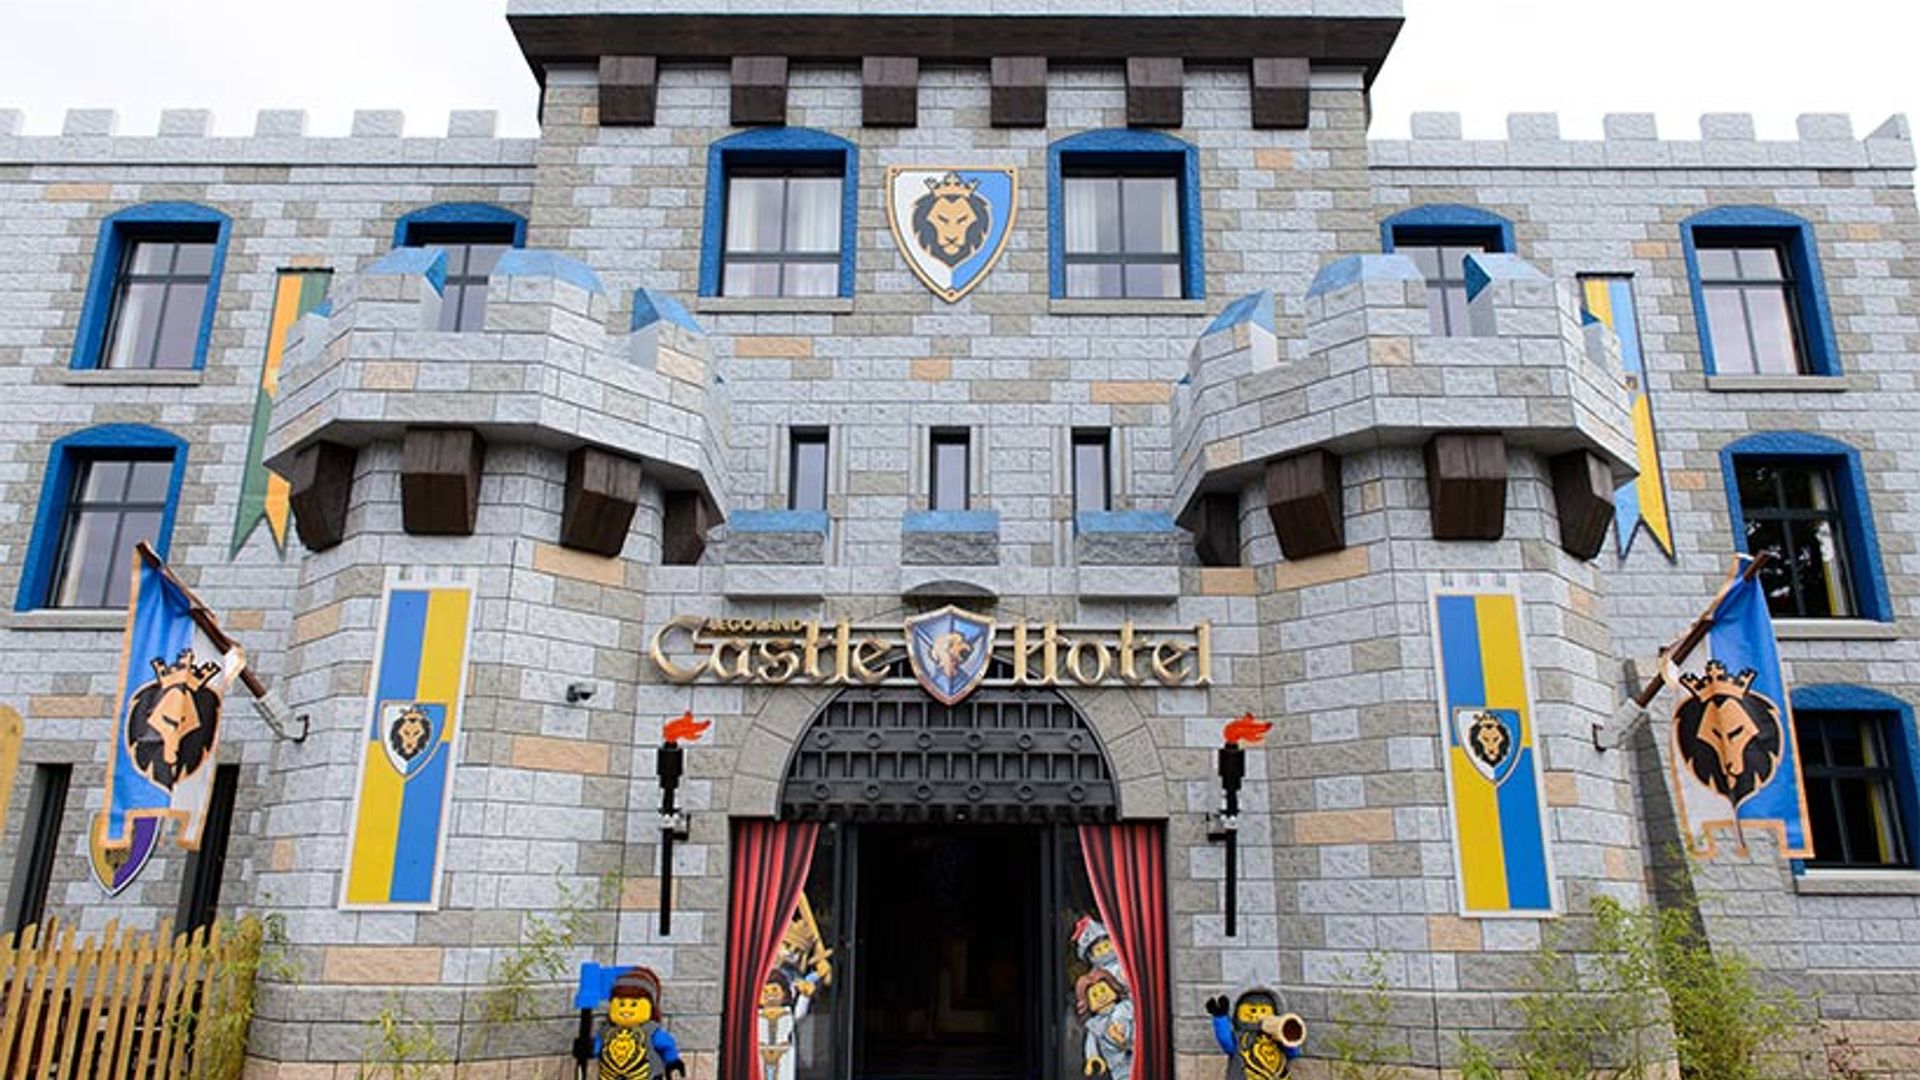 lego castle hotel